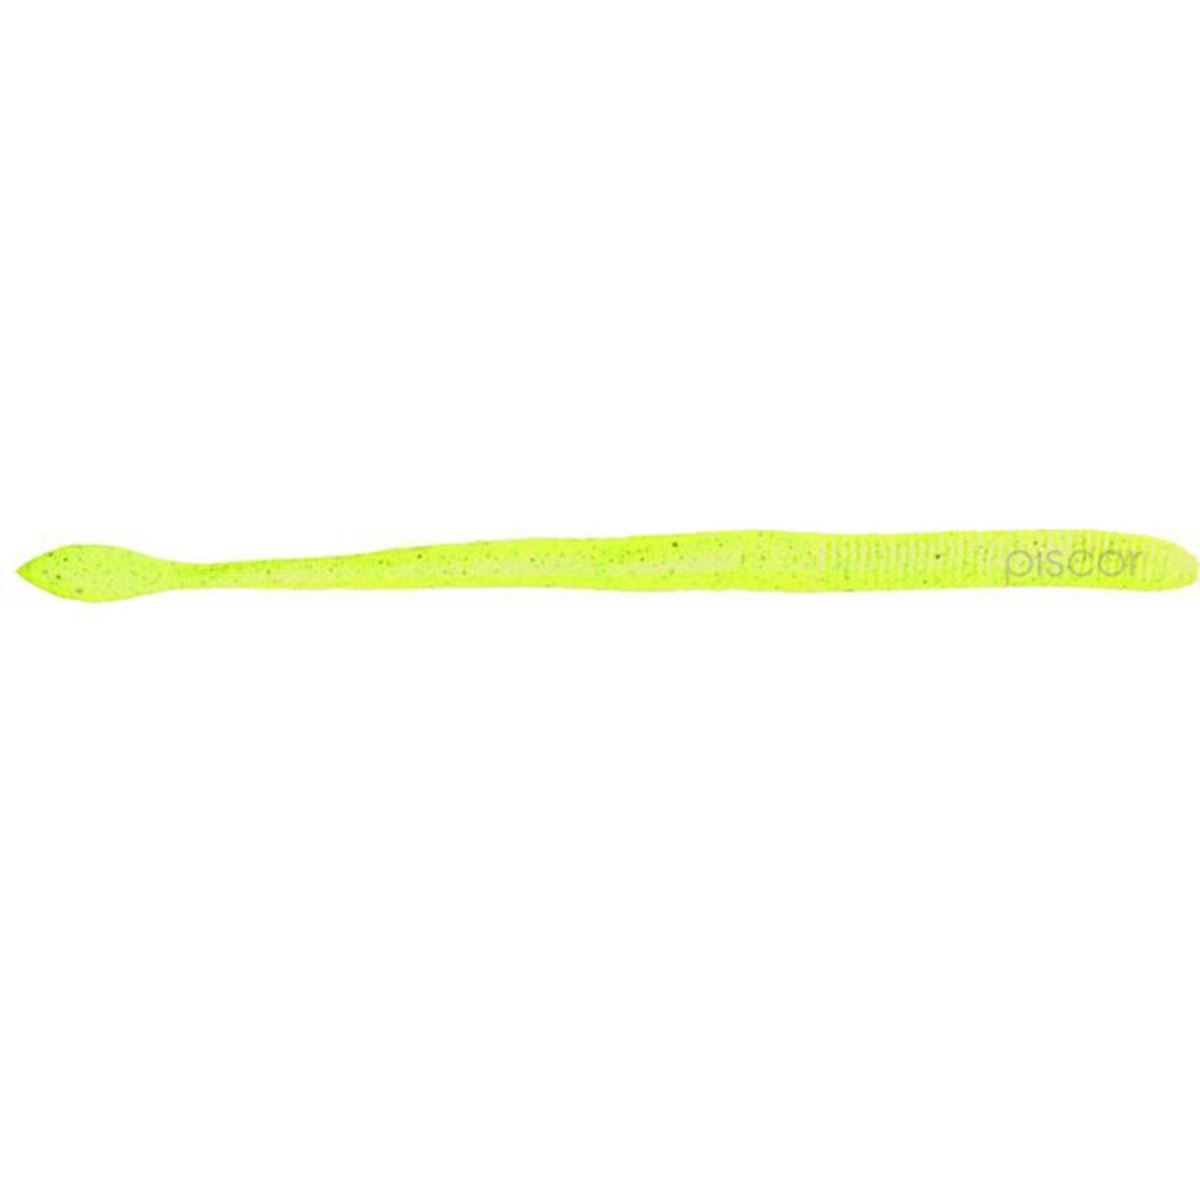 Berkley Vermone Nightcrawler Gulp Alive 7.5 cm - 3in - 7.5 cm - Farbe  Chartreuse Grün       